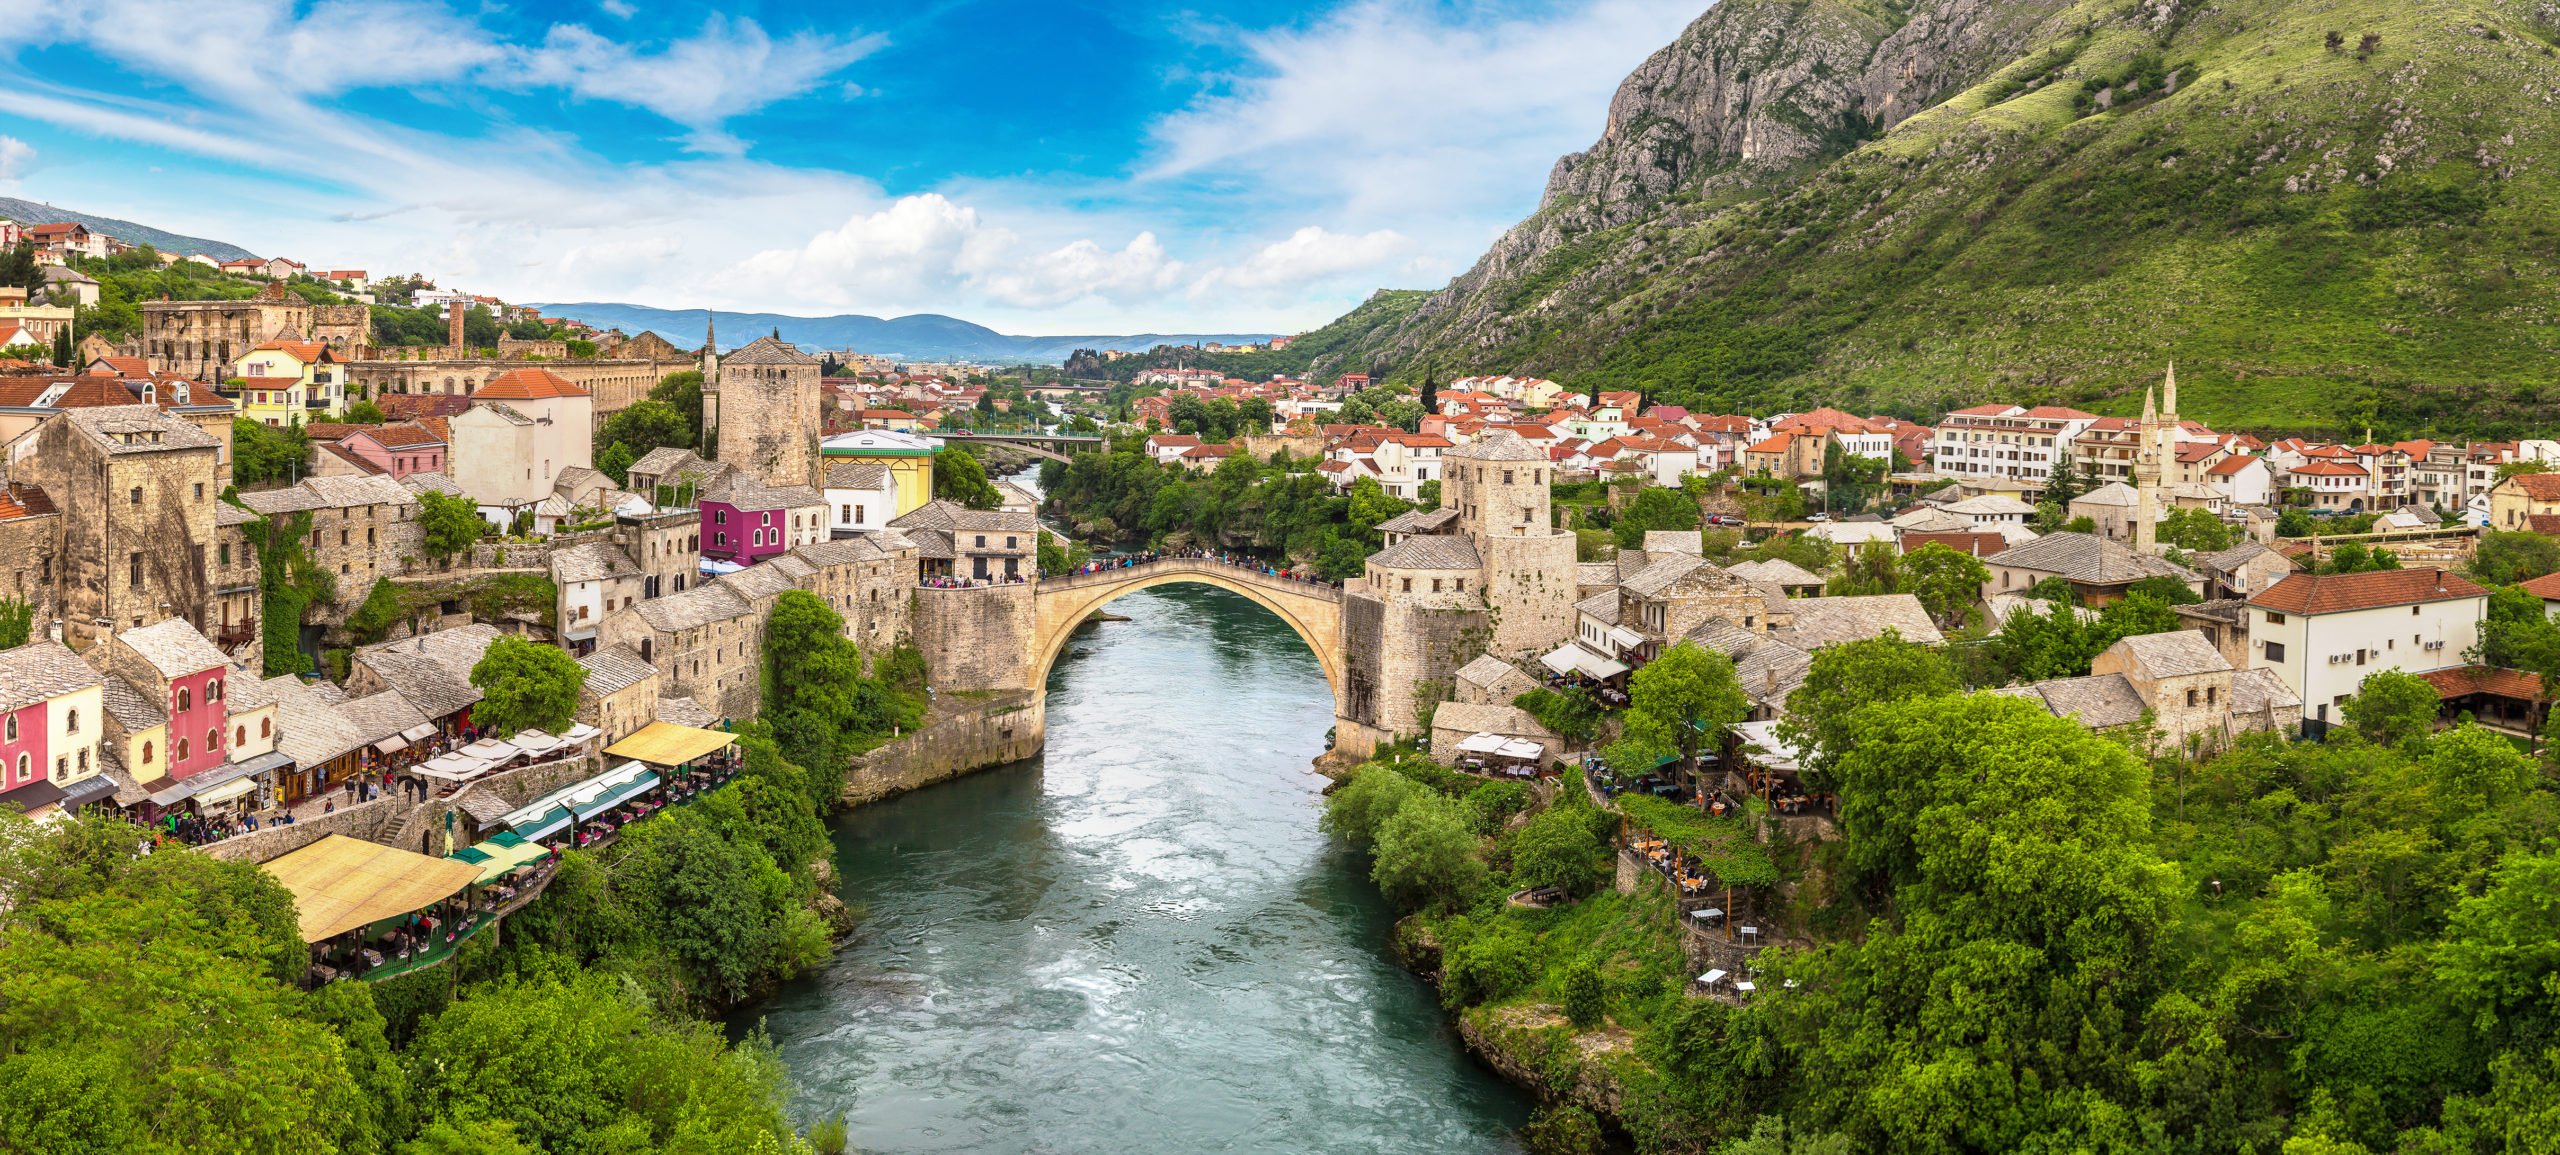 Mostar Travel